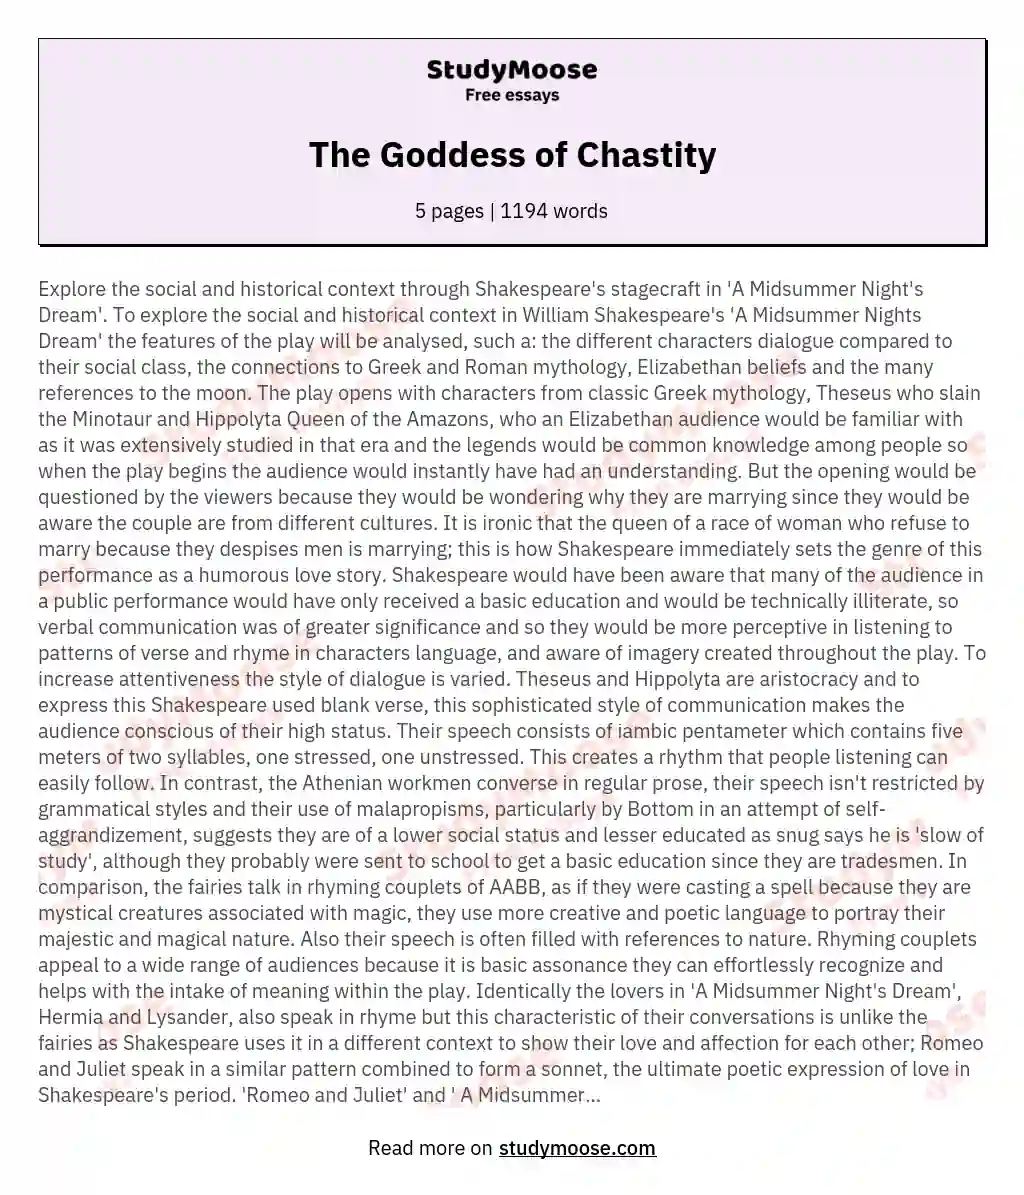 The Goddess of Chastity essay